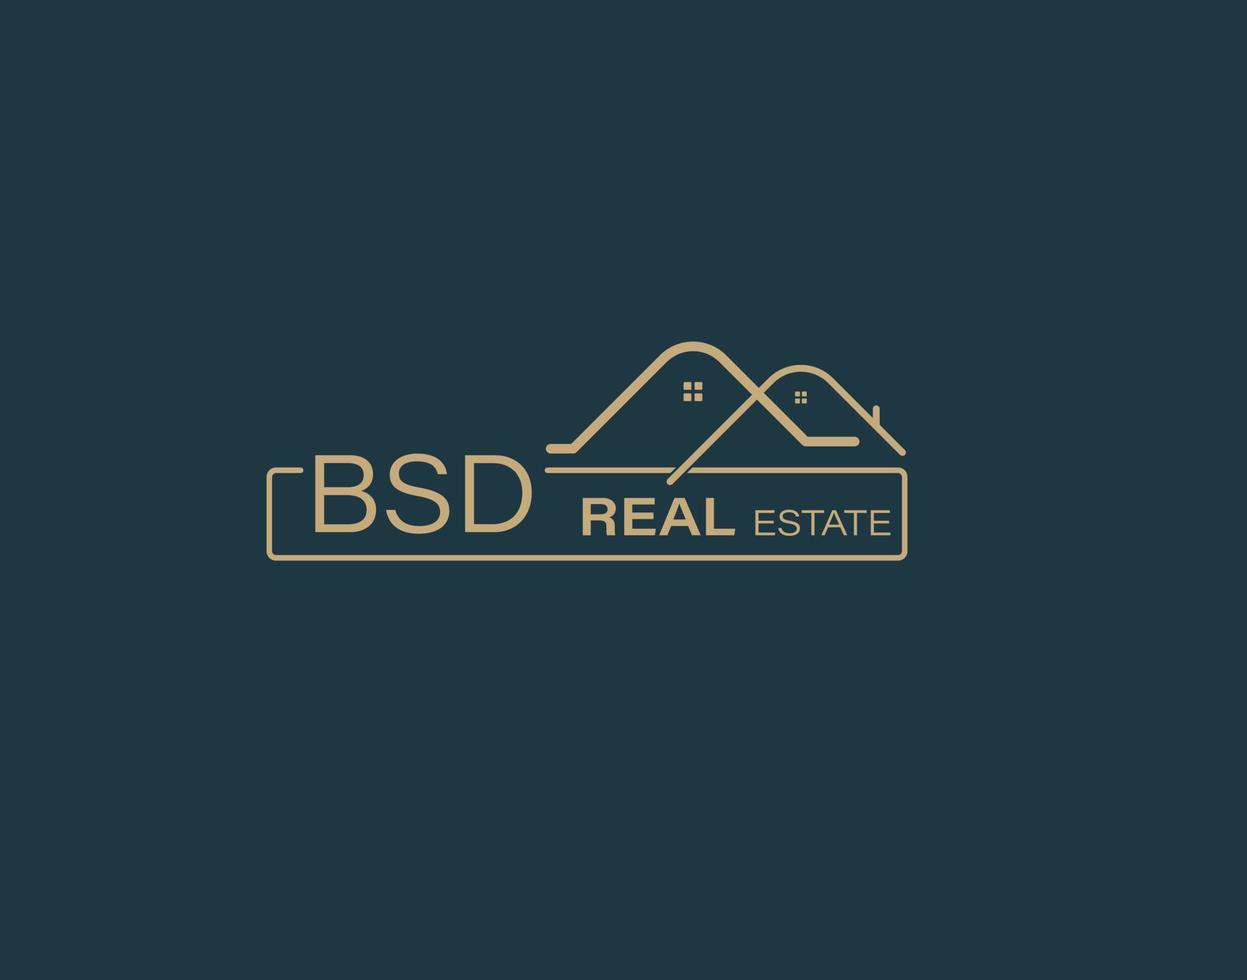 BSD Real Estate and Consultants Logo Design Vectors images. Luxury Real Estate Logo Design